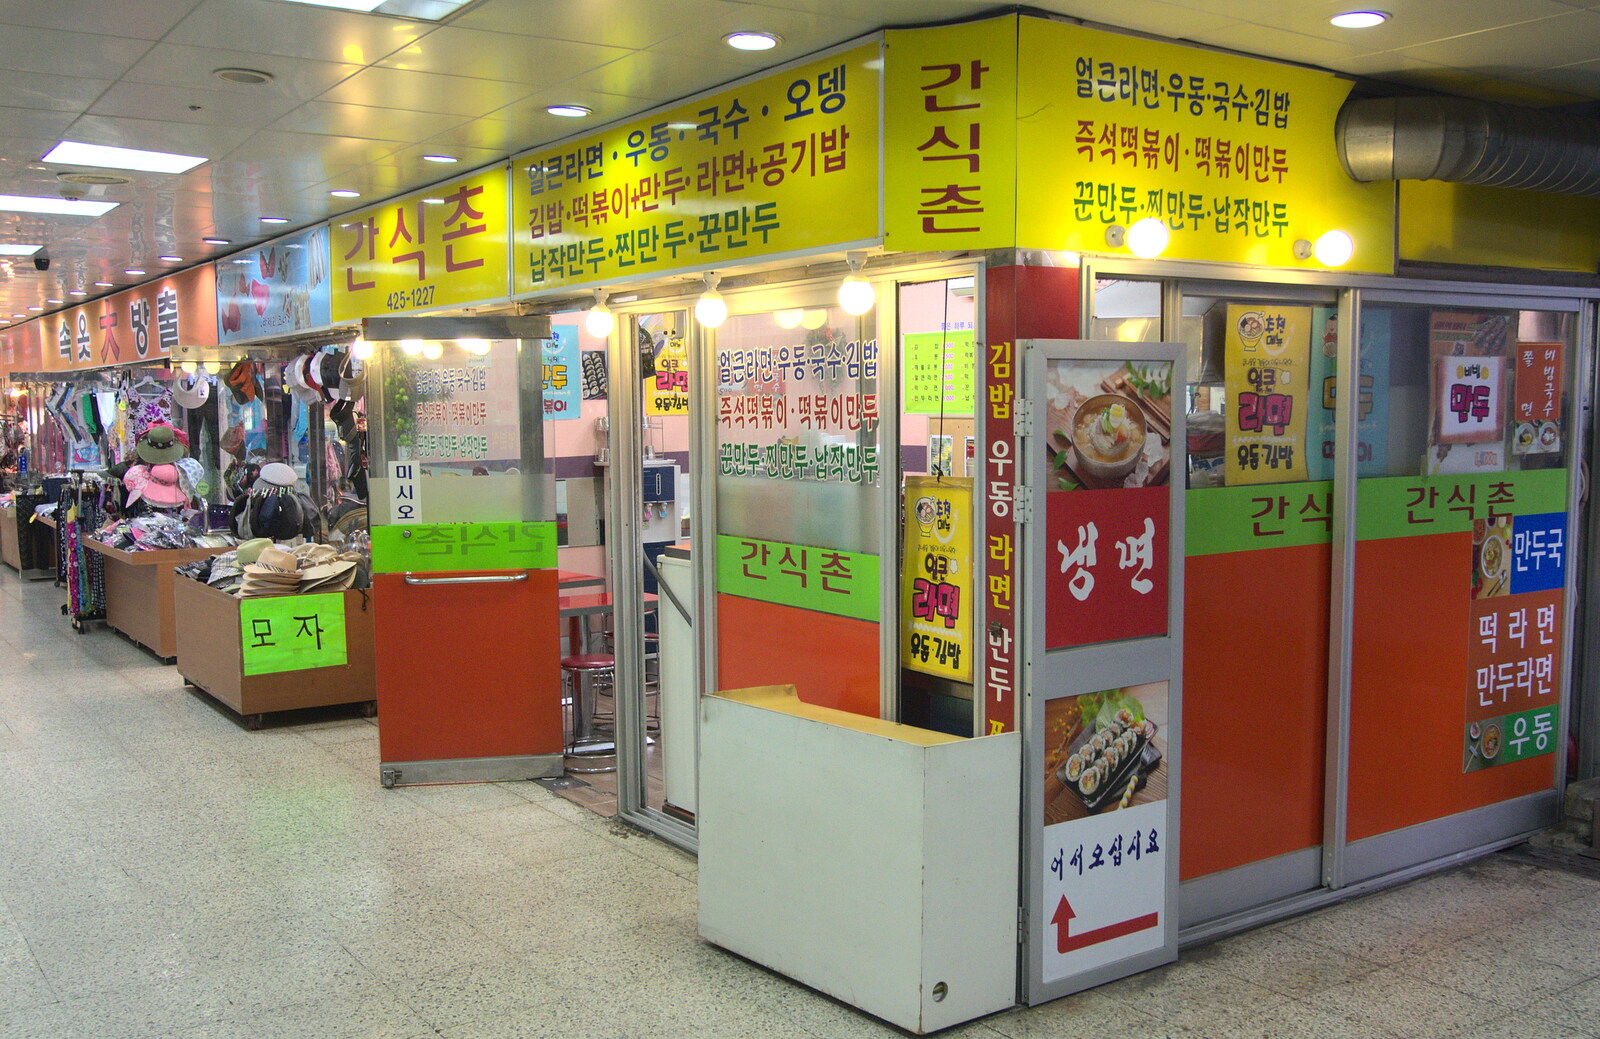 A subway shop unit from Seomun Market, Daegu, South Korea - 1st July 2012